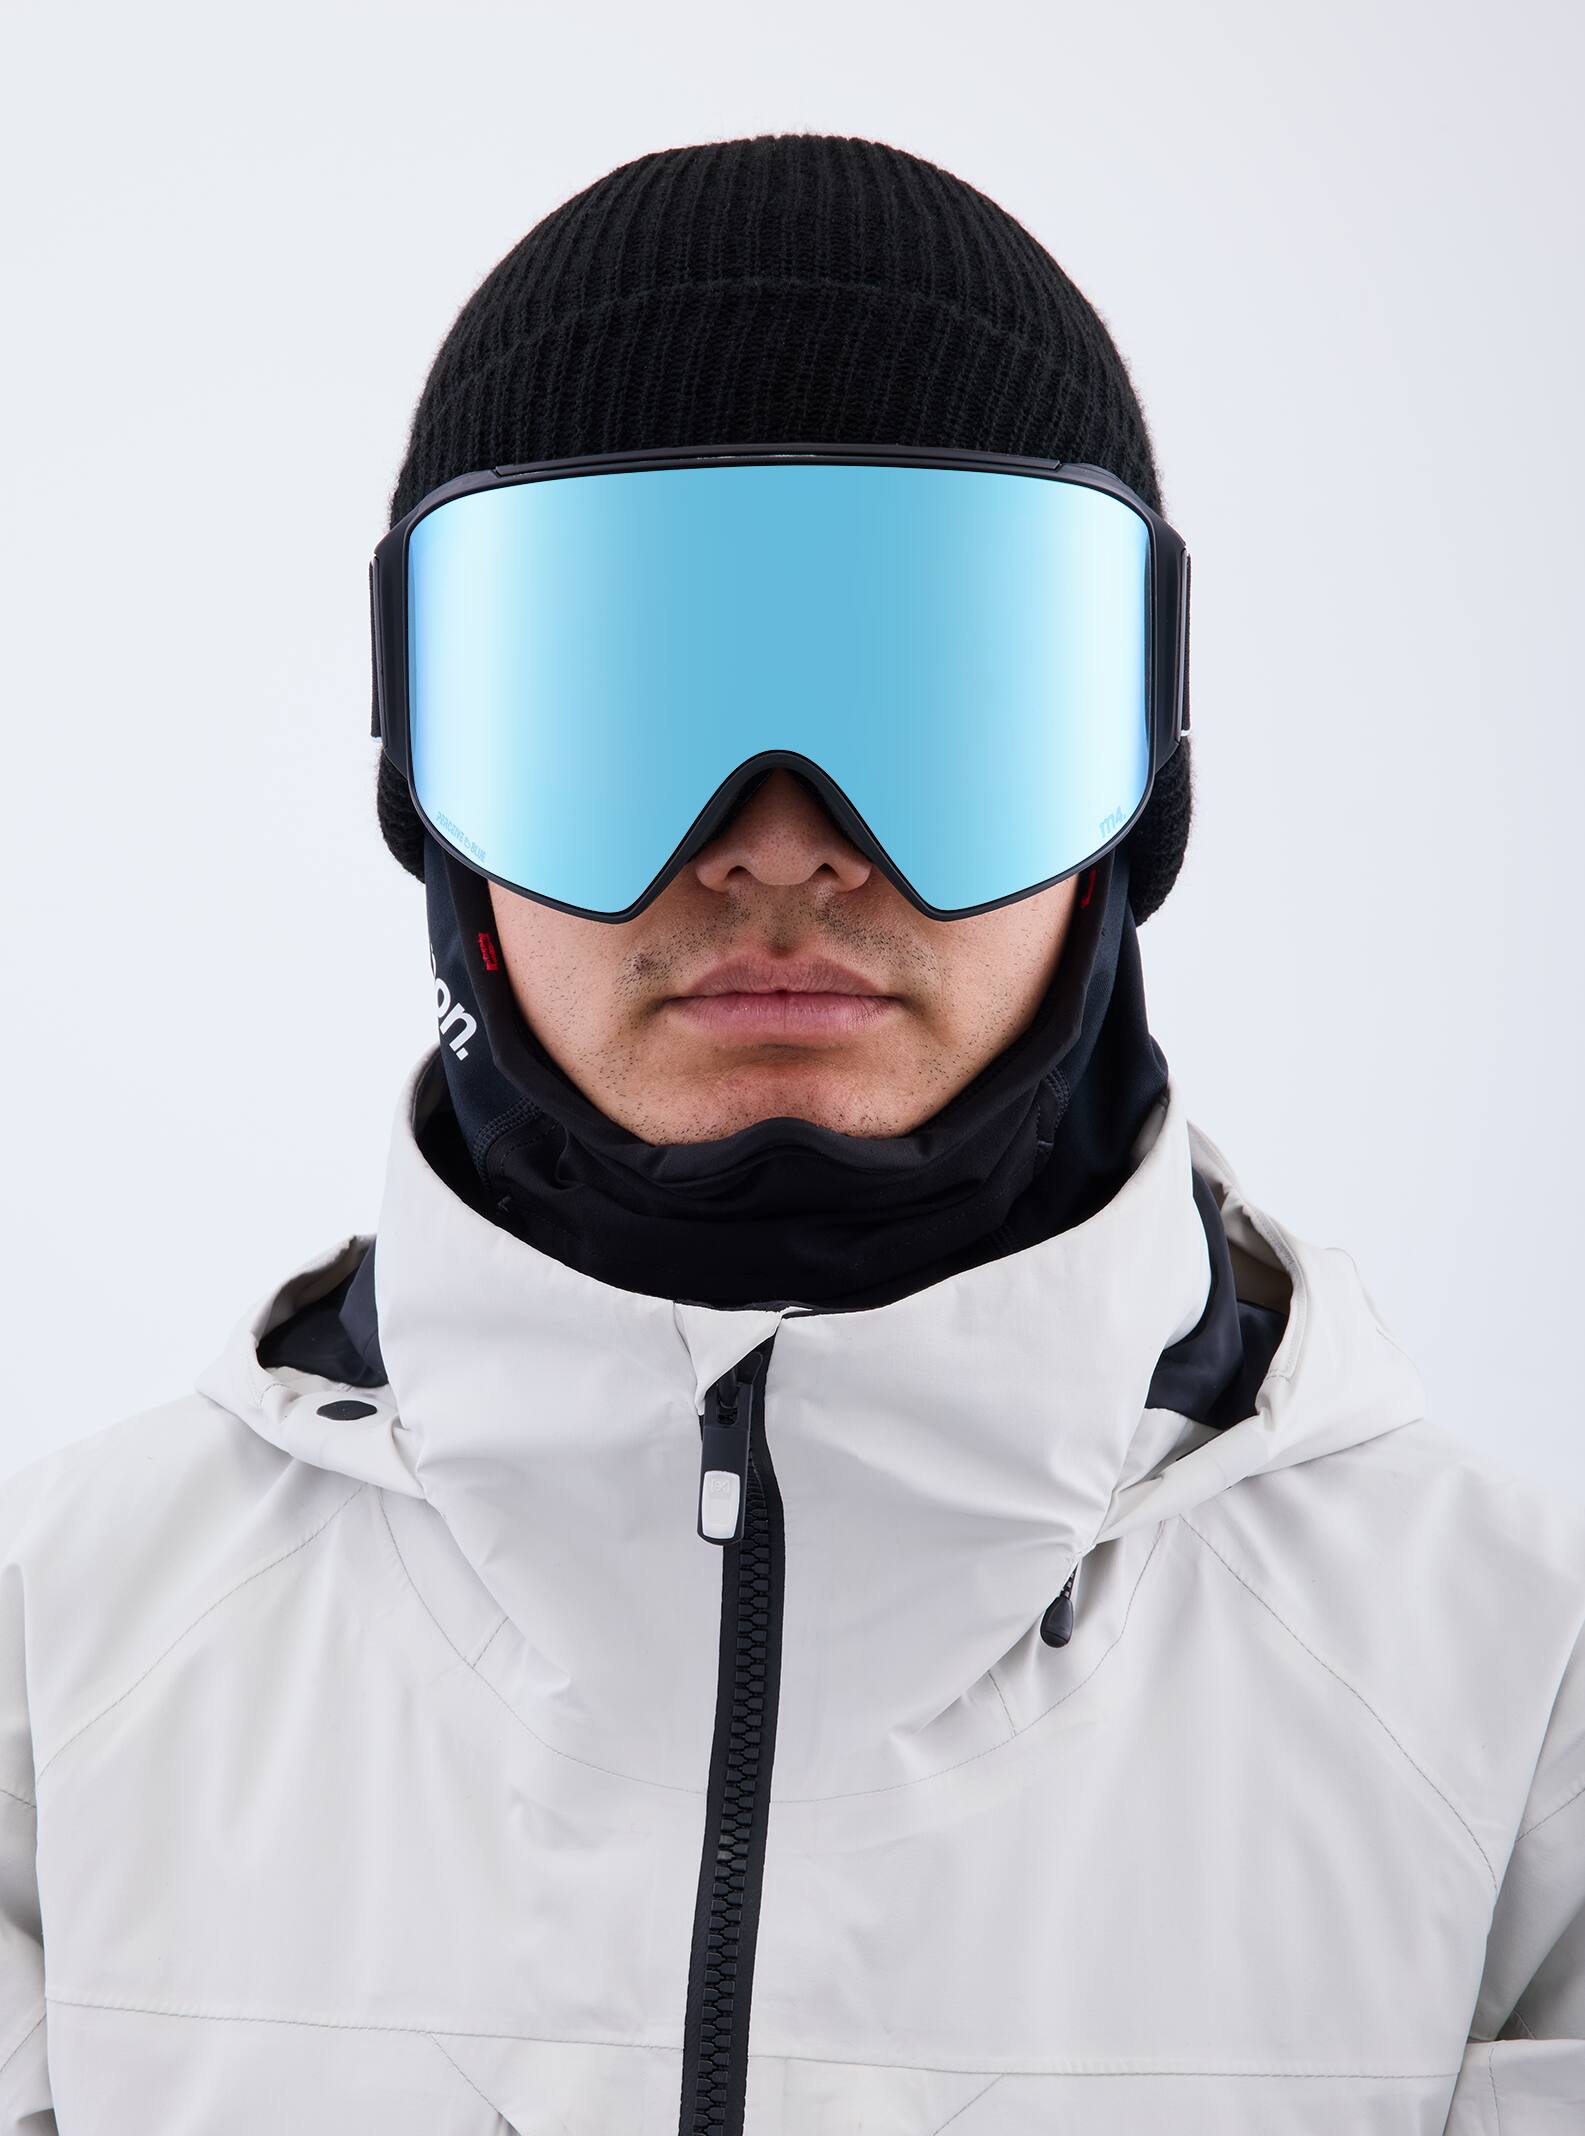 Gafas Snowboard Burton Nueva Coleccion - Anon M4 Low Bridge Fit Goggles  (Cylindrical) + Bonus Lens + MFI® Face Mask Hombre Naranjas Rojas